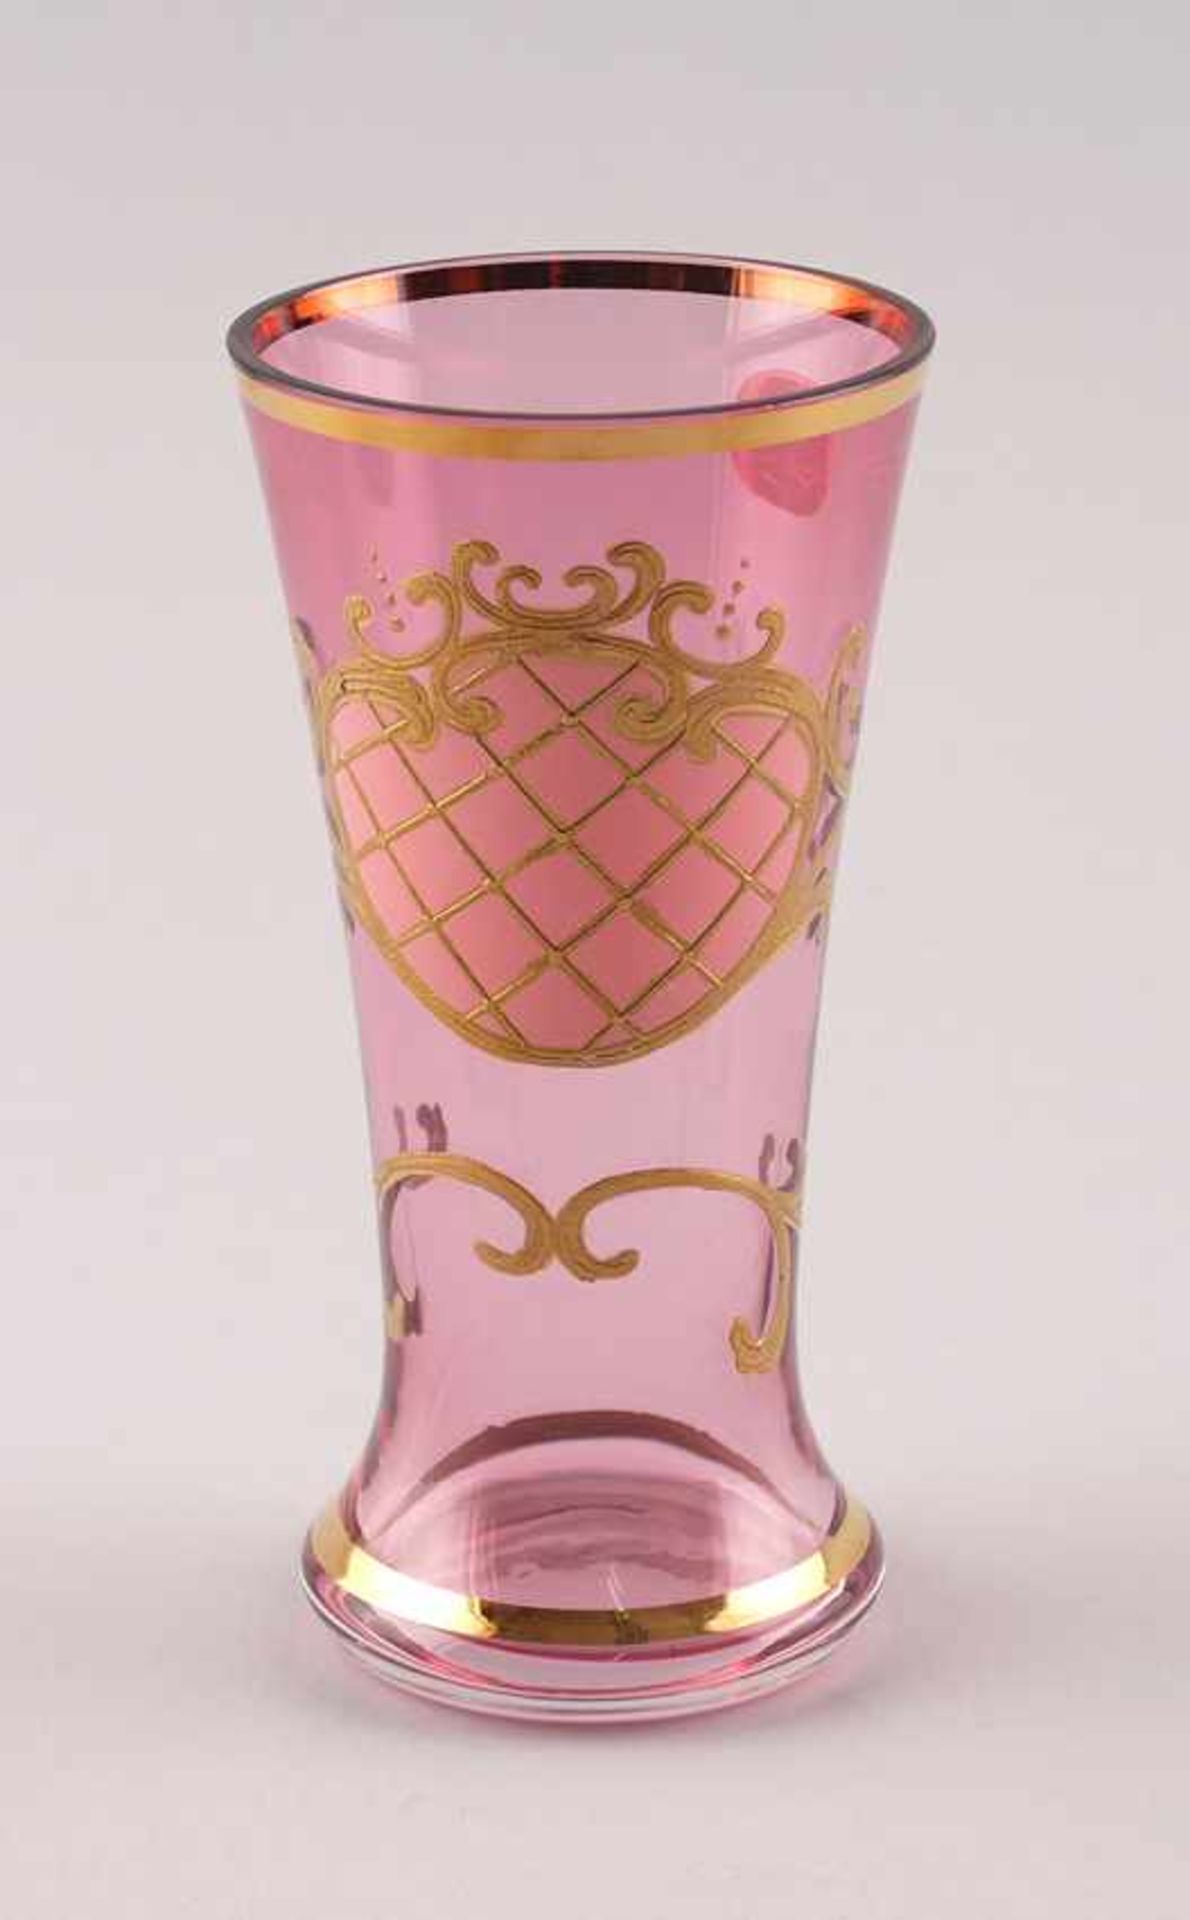 Trinkbecher mit Golddekor. 20. Jh., Böhmen, aus formgeblasenem rosa-farbenem Klarglas, leicht